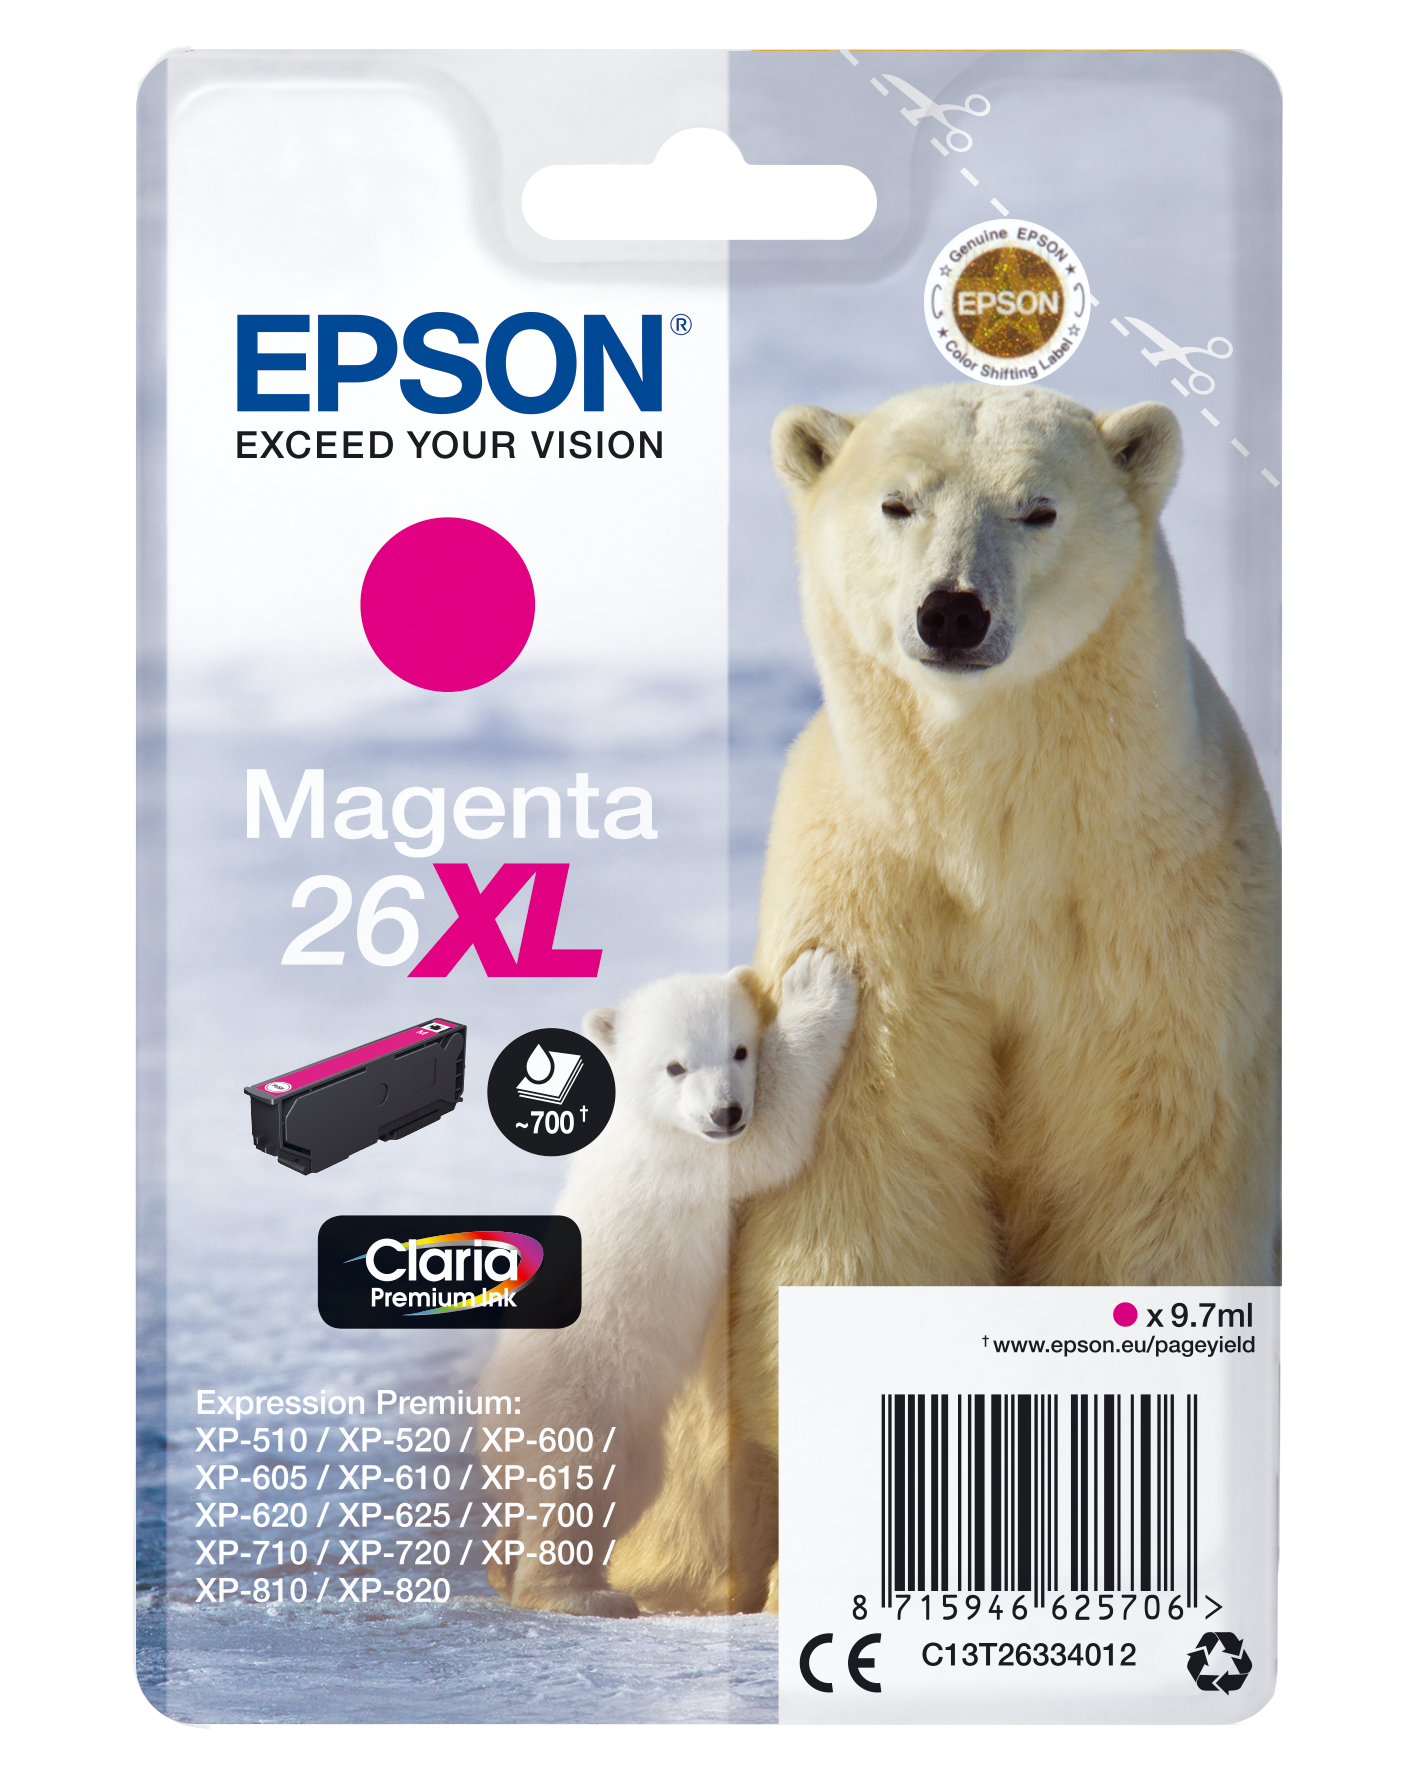 Epson Polar bear Singlepack Magenta 26XL Claria Premium Ink single pack / magenta